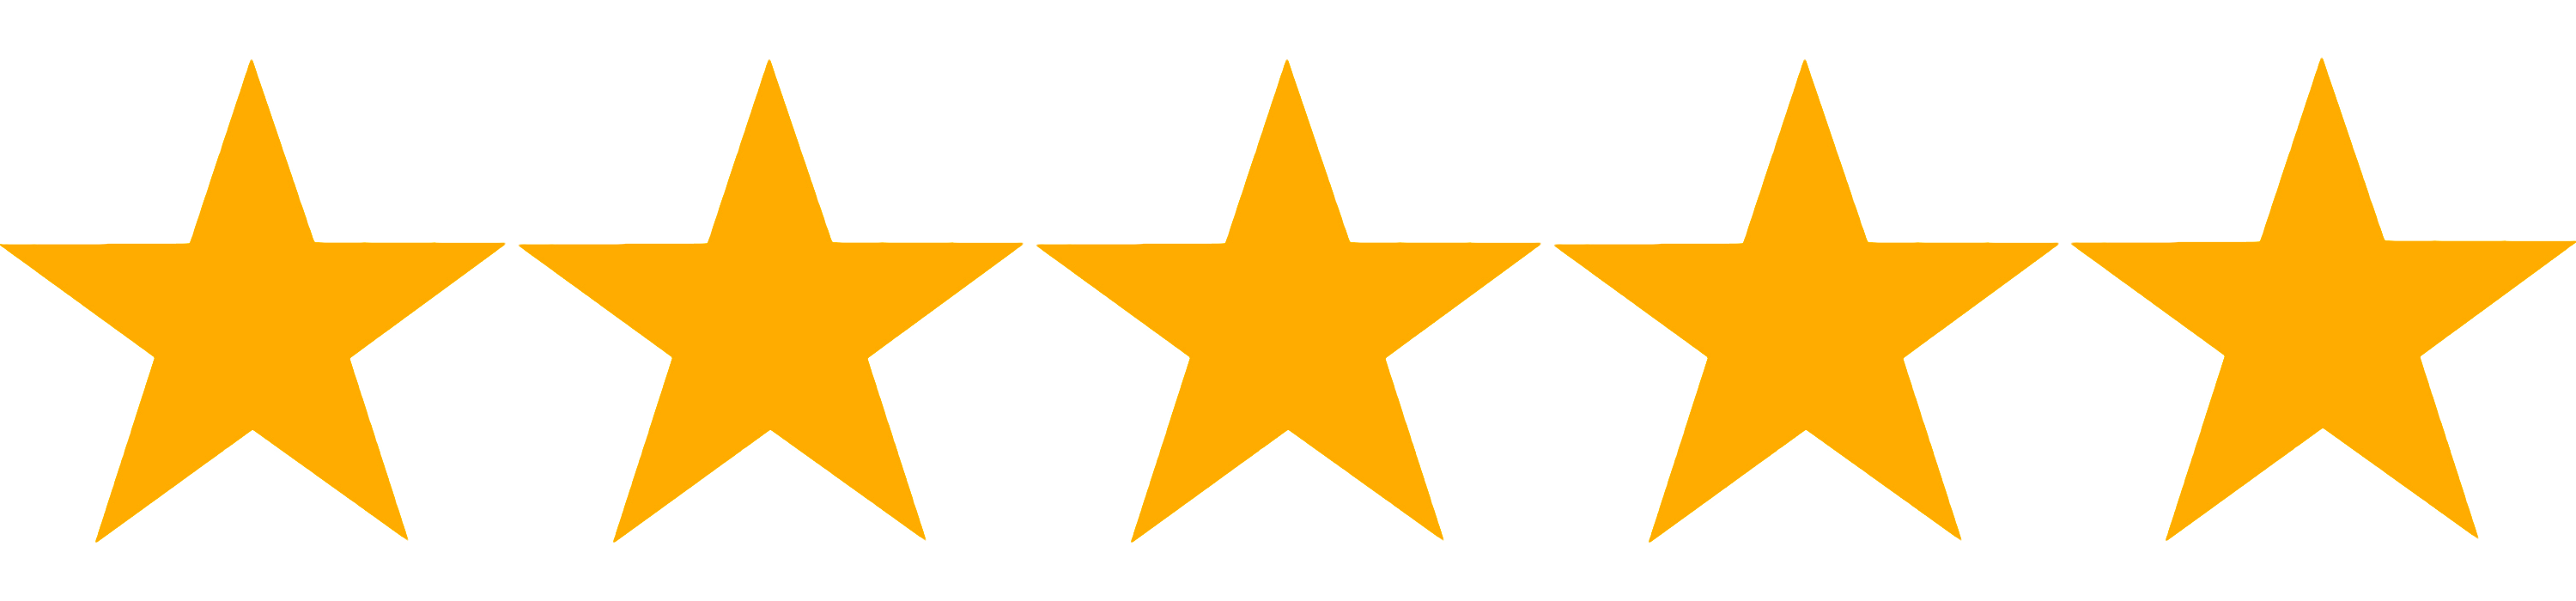 Five Star Rating Golden PNG